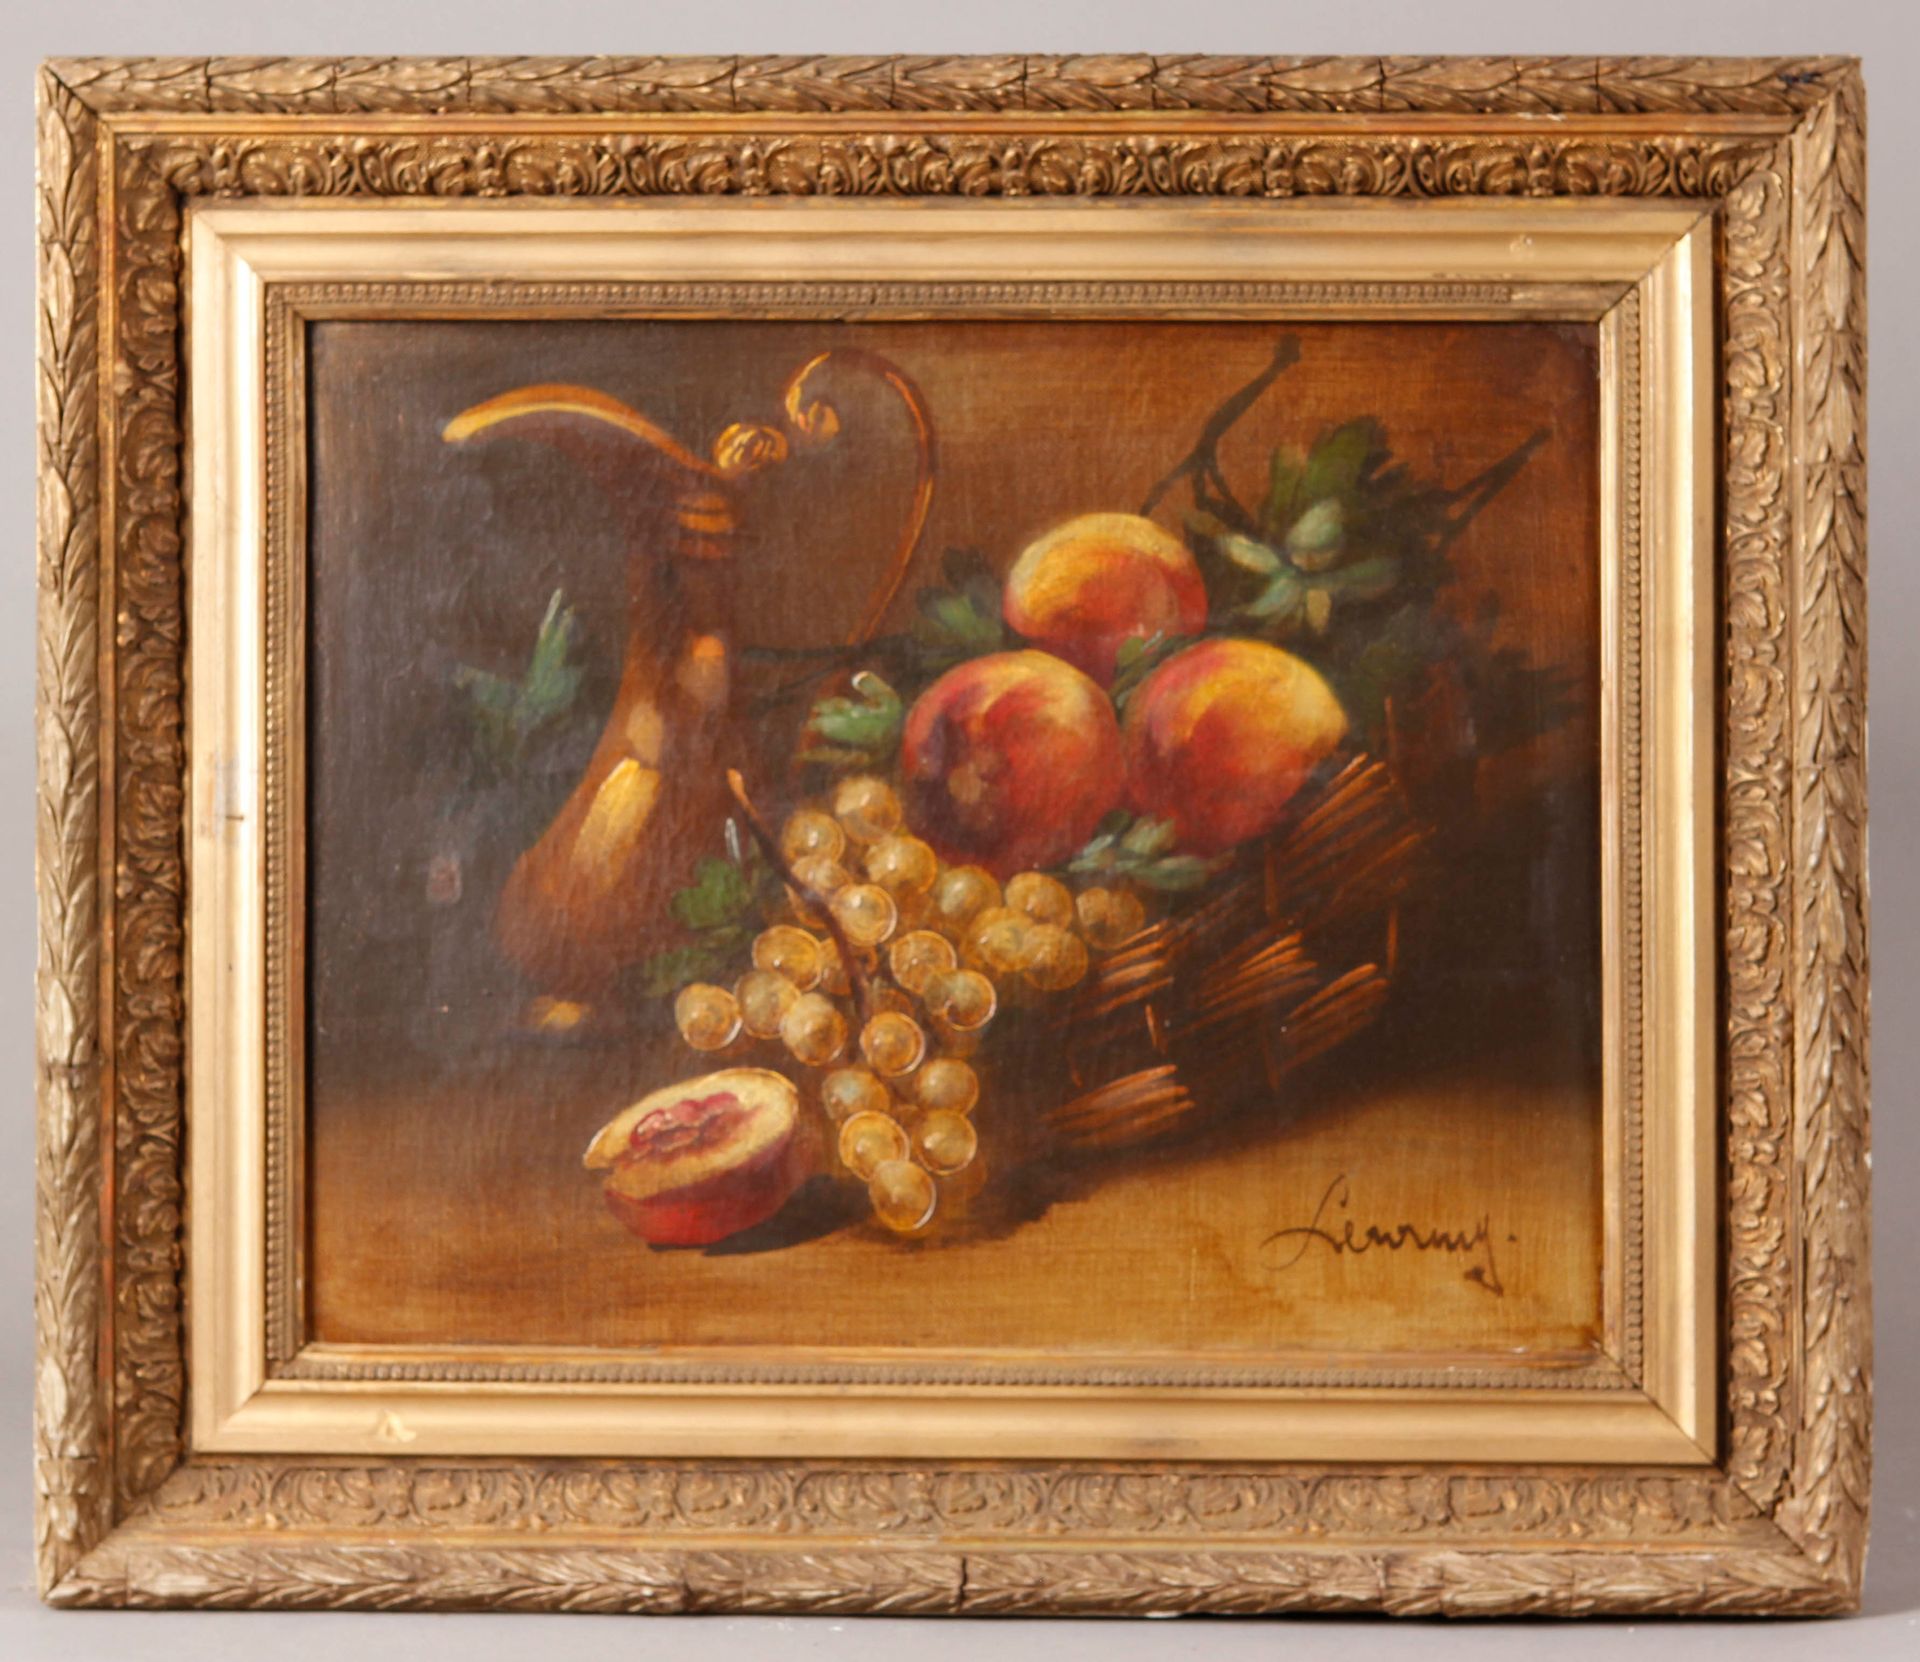 Null LENRMY（20世纪）。

水果静物

布面油画，右下方有签名（事故，修复）。

31 x 39 厘米